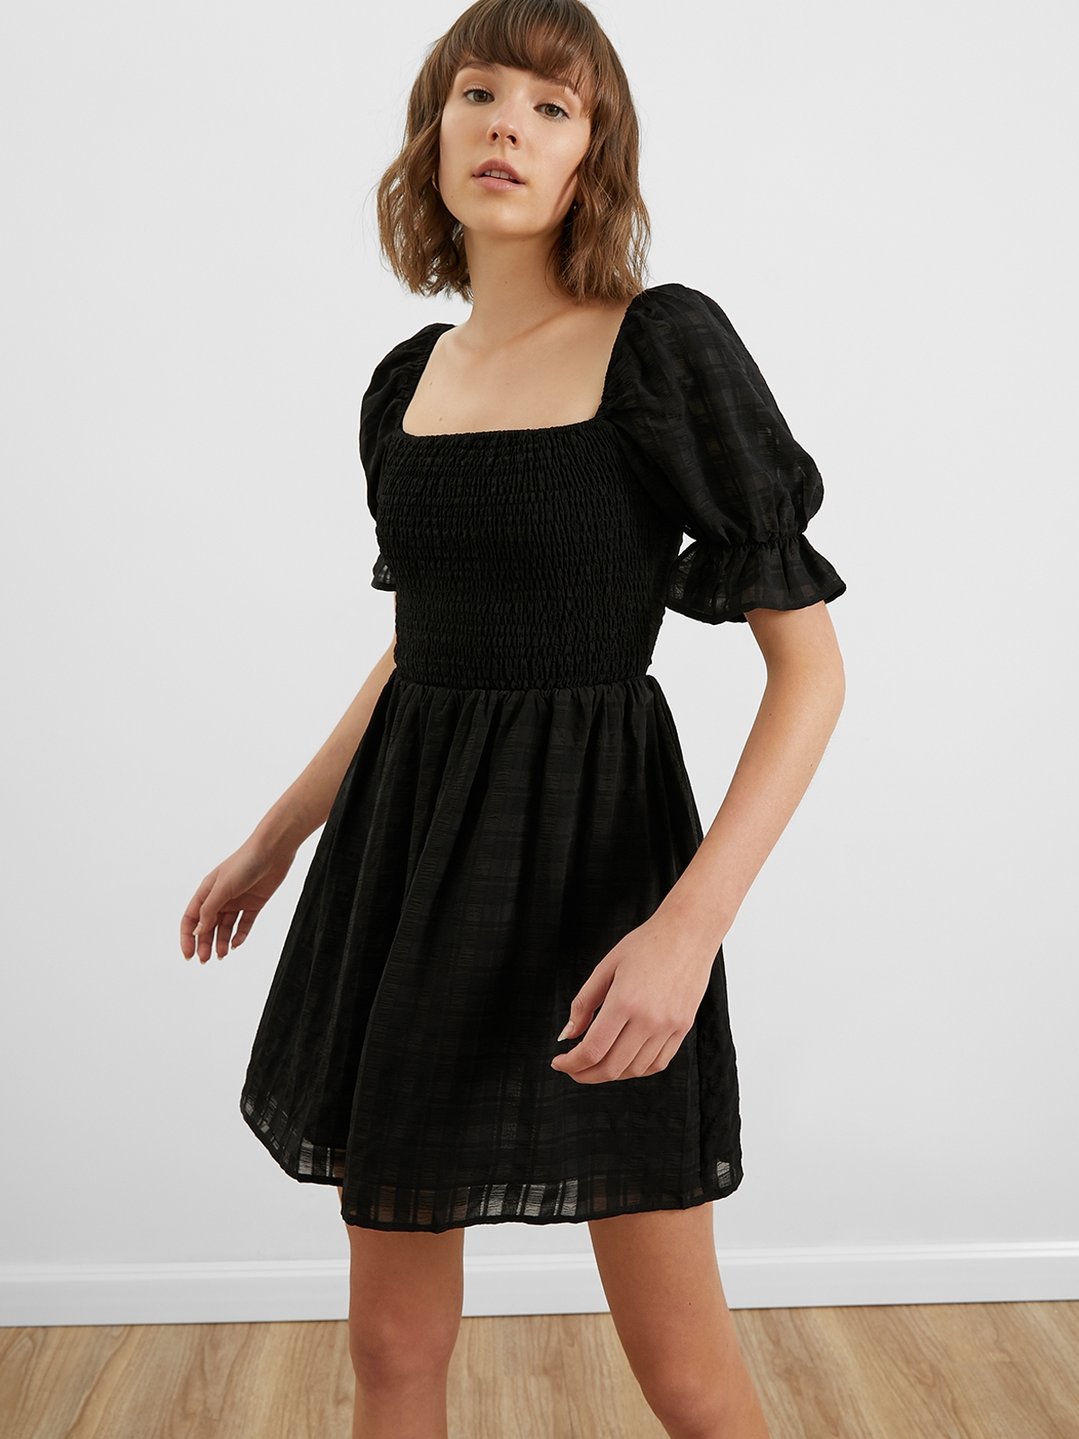 Puffed Sleeve Square Neckline Dress - Black - Pomelo Fashion